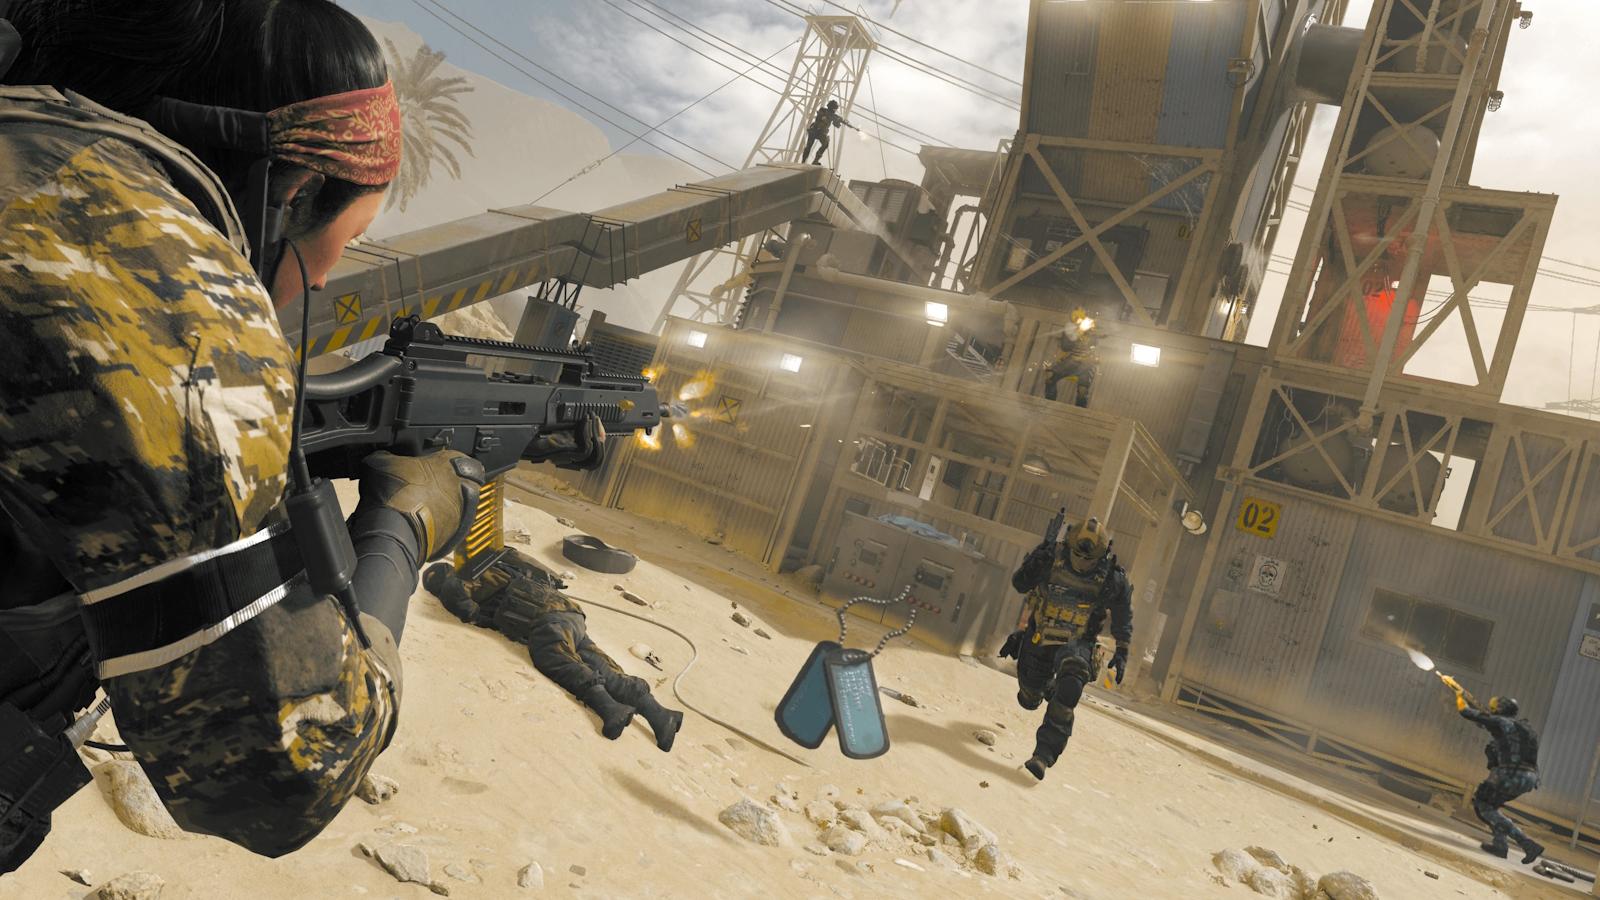 Call Of Duty: Modern Warfare's Season 2 Brings Back 'Rust' Map